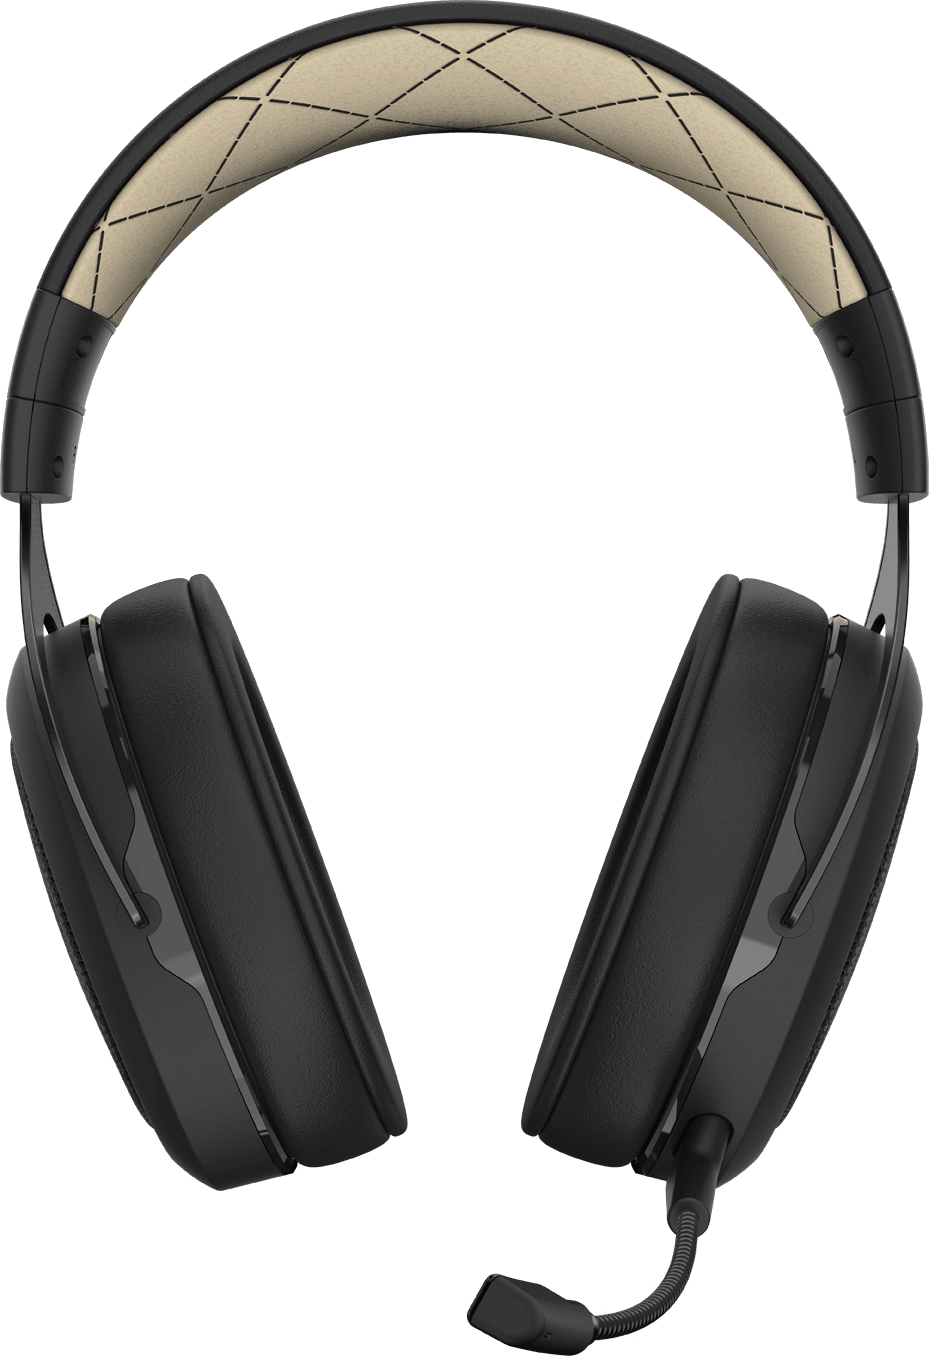 HS70 PRO WIRELESS Gaming Headset — Cream, Refurbished